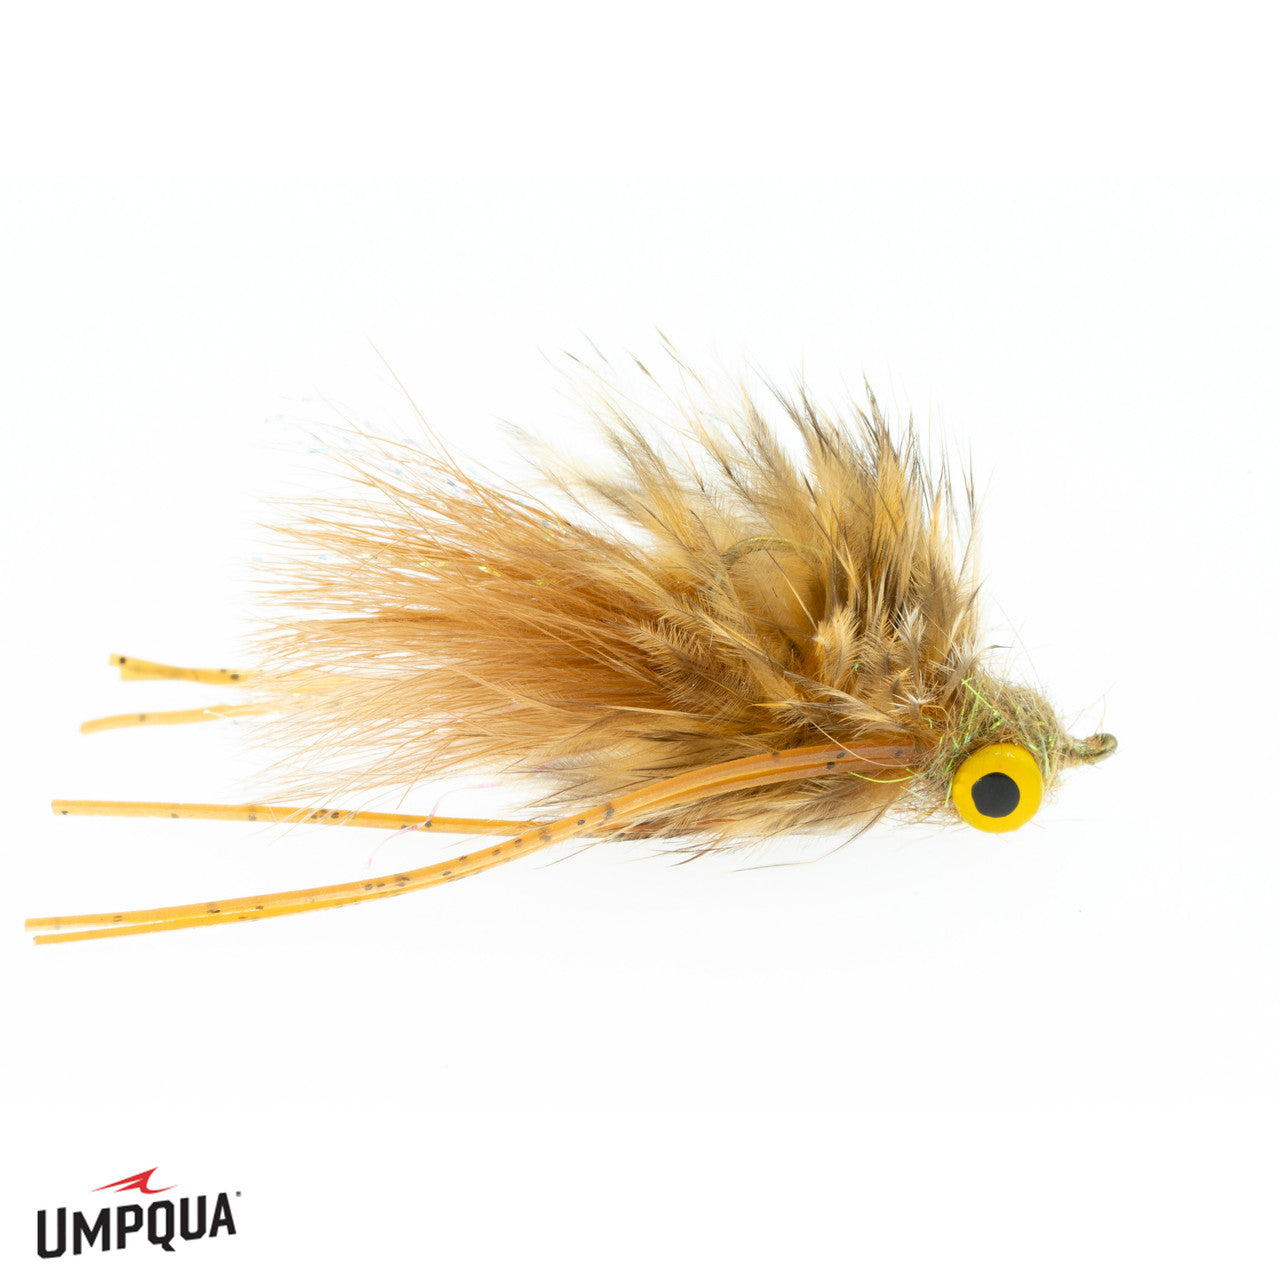 Umpqua Skiddish Smolt - Size 4